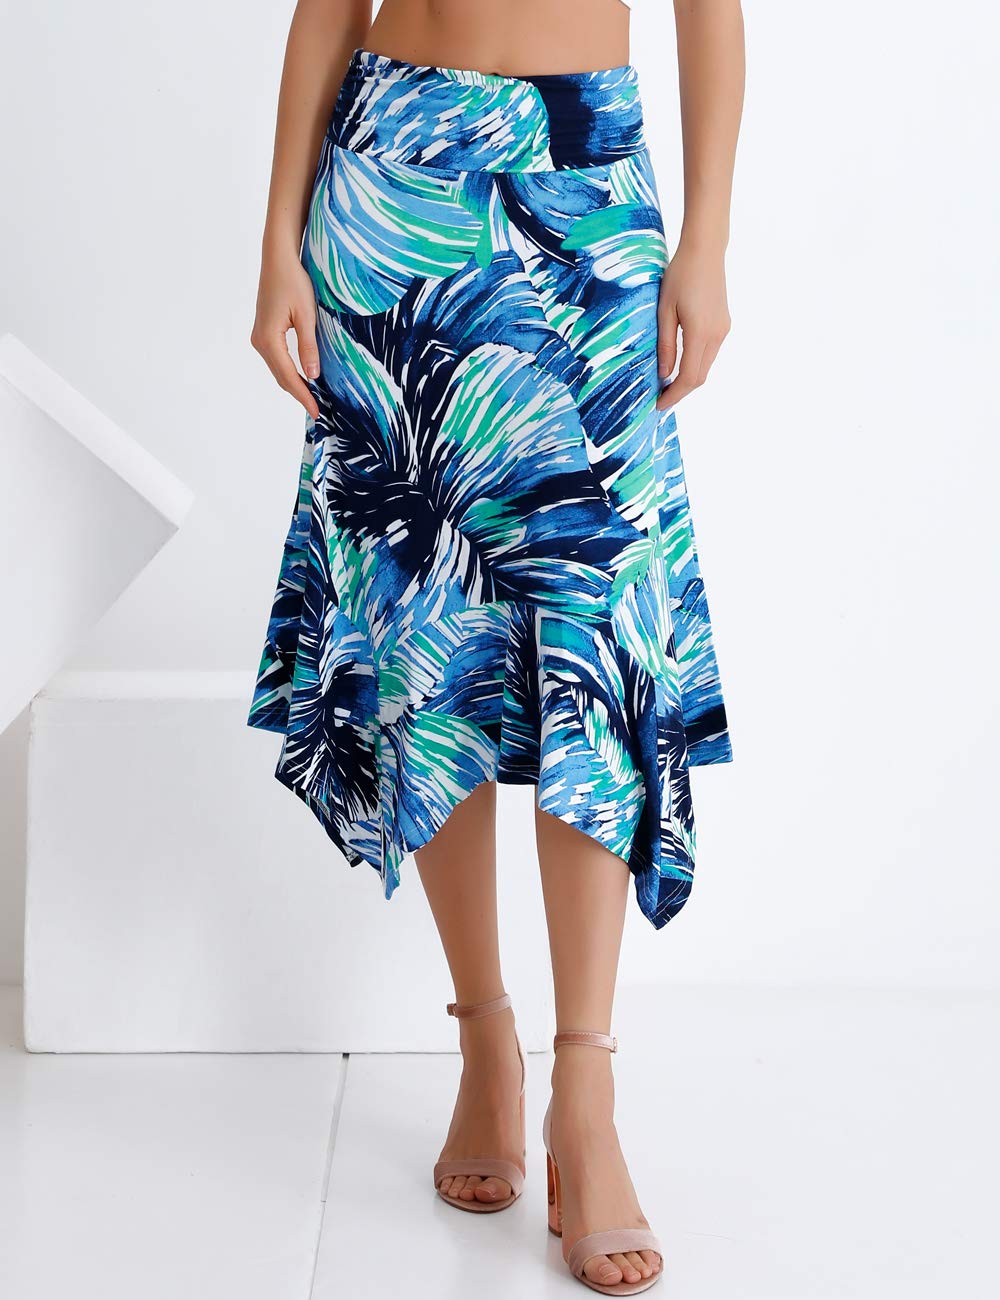 DJT Women's Tropical Print Handkerchief Hemline Midi Skirt